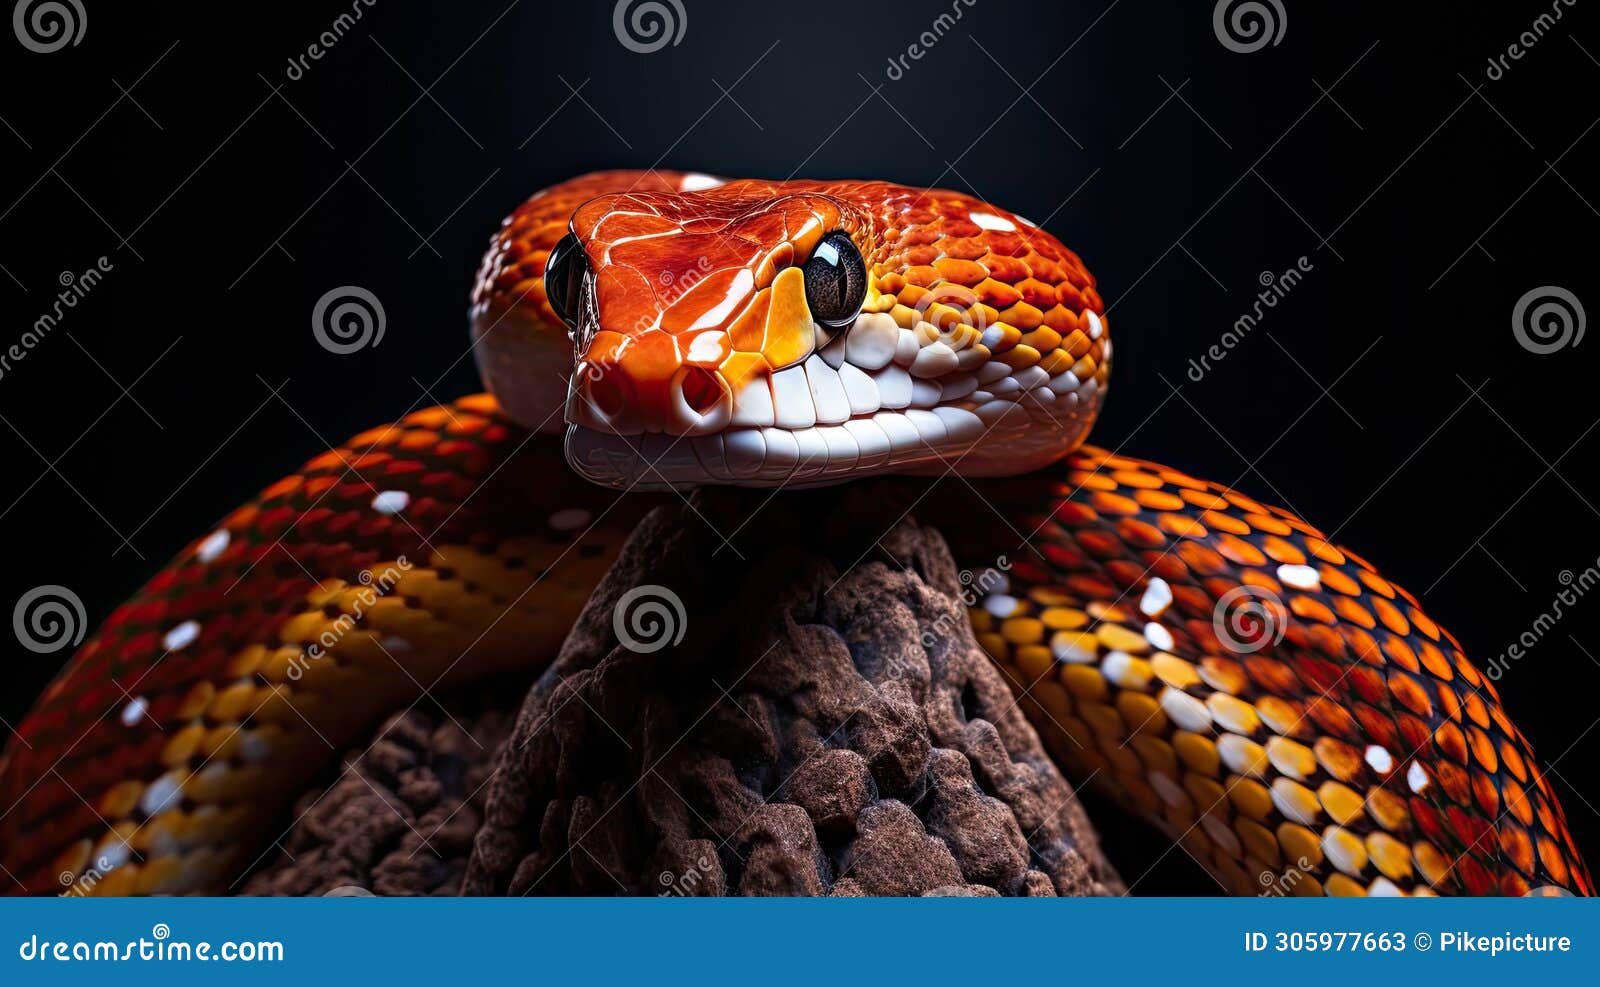 slither corn snake